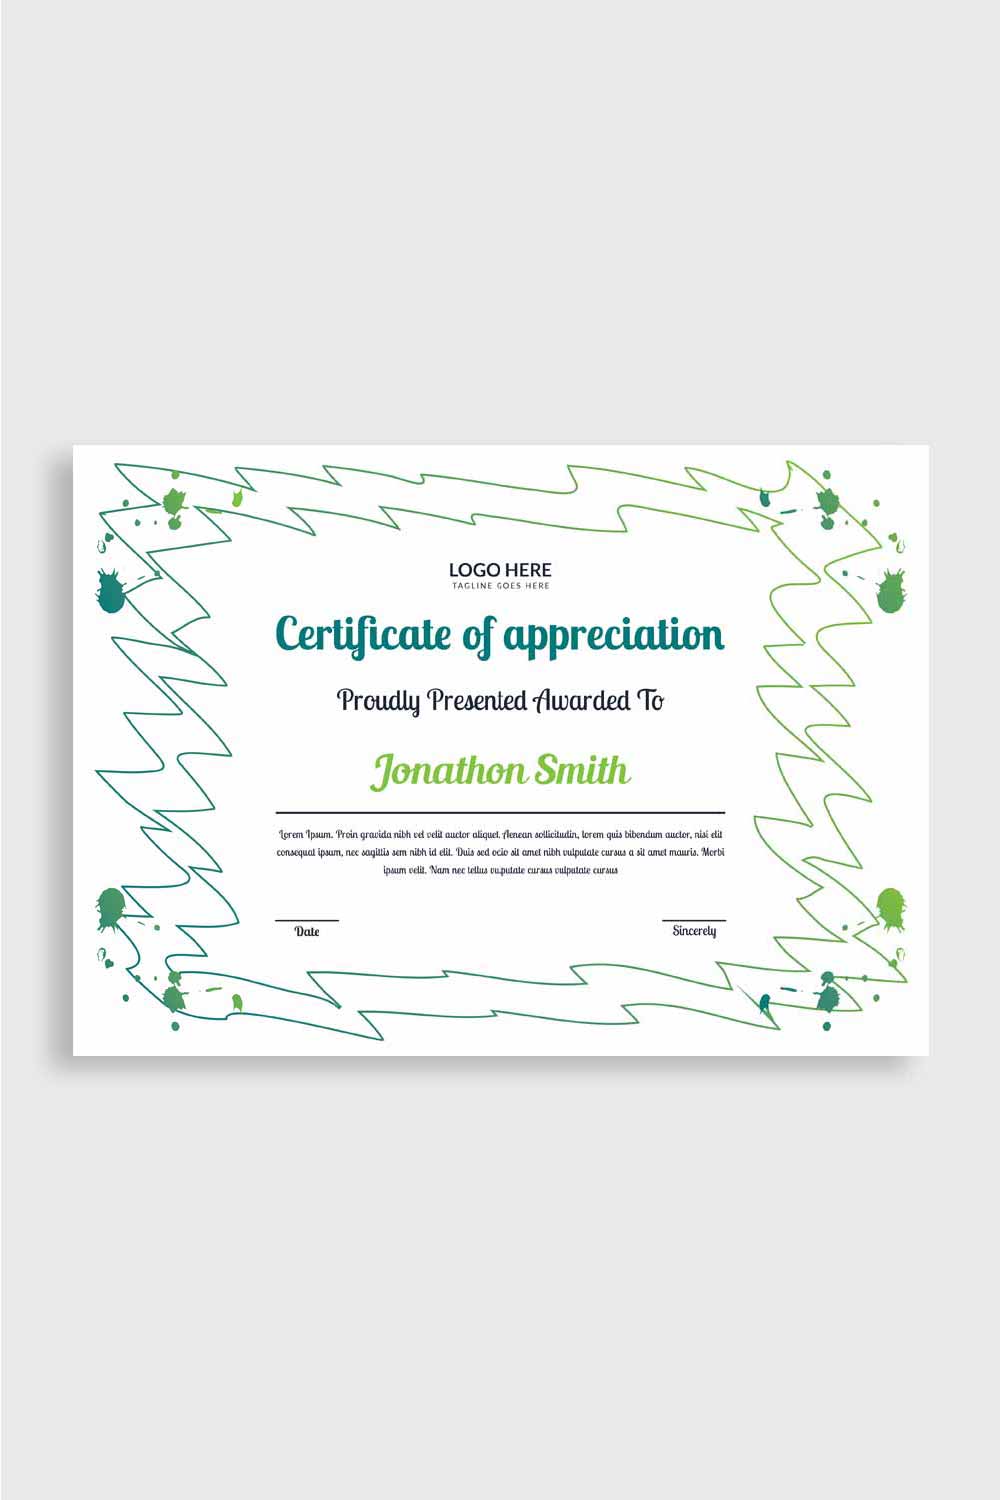 Jonathon Smith Certificate Template Design pinterest preview image.